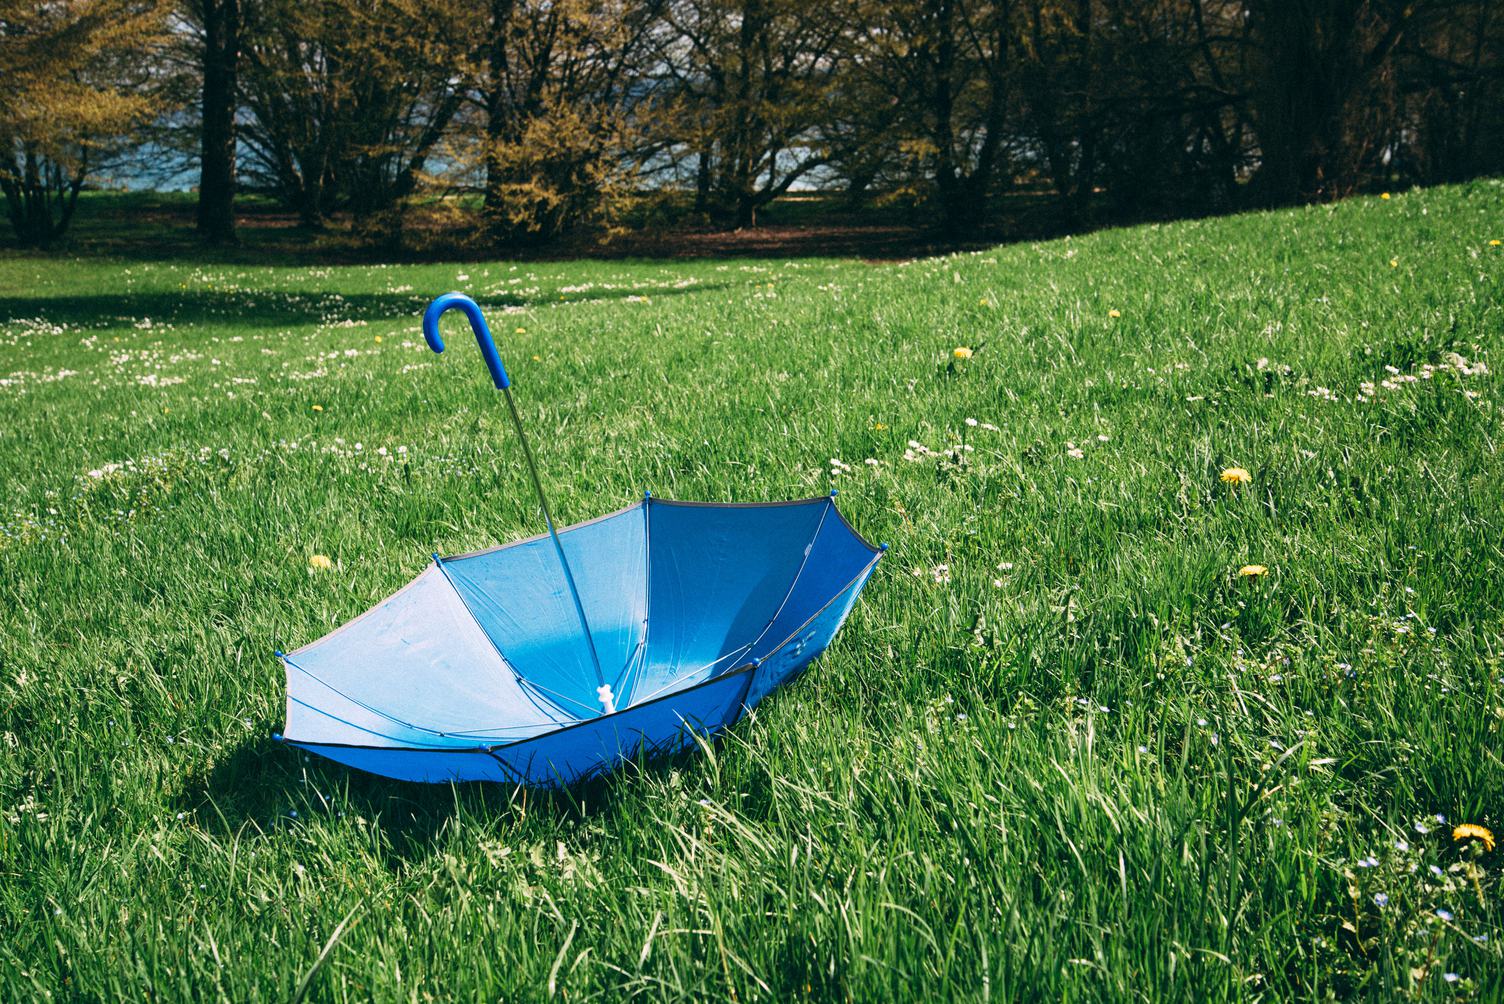 Blue Umbrella on the Grass